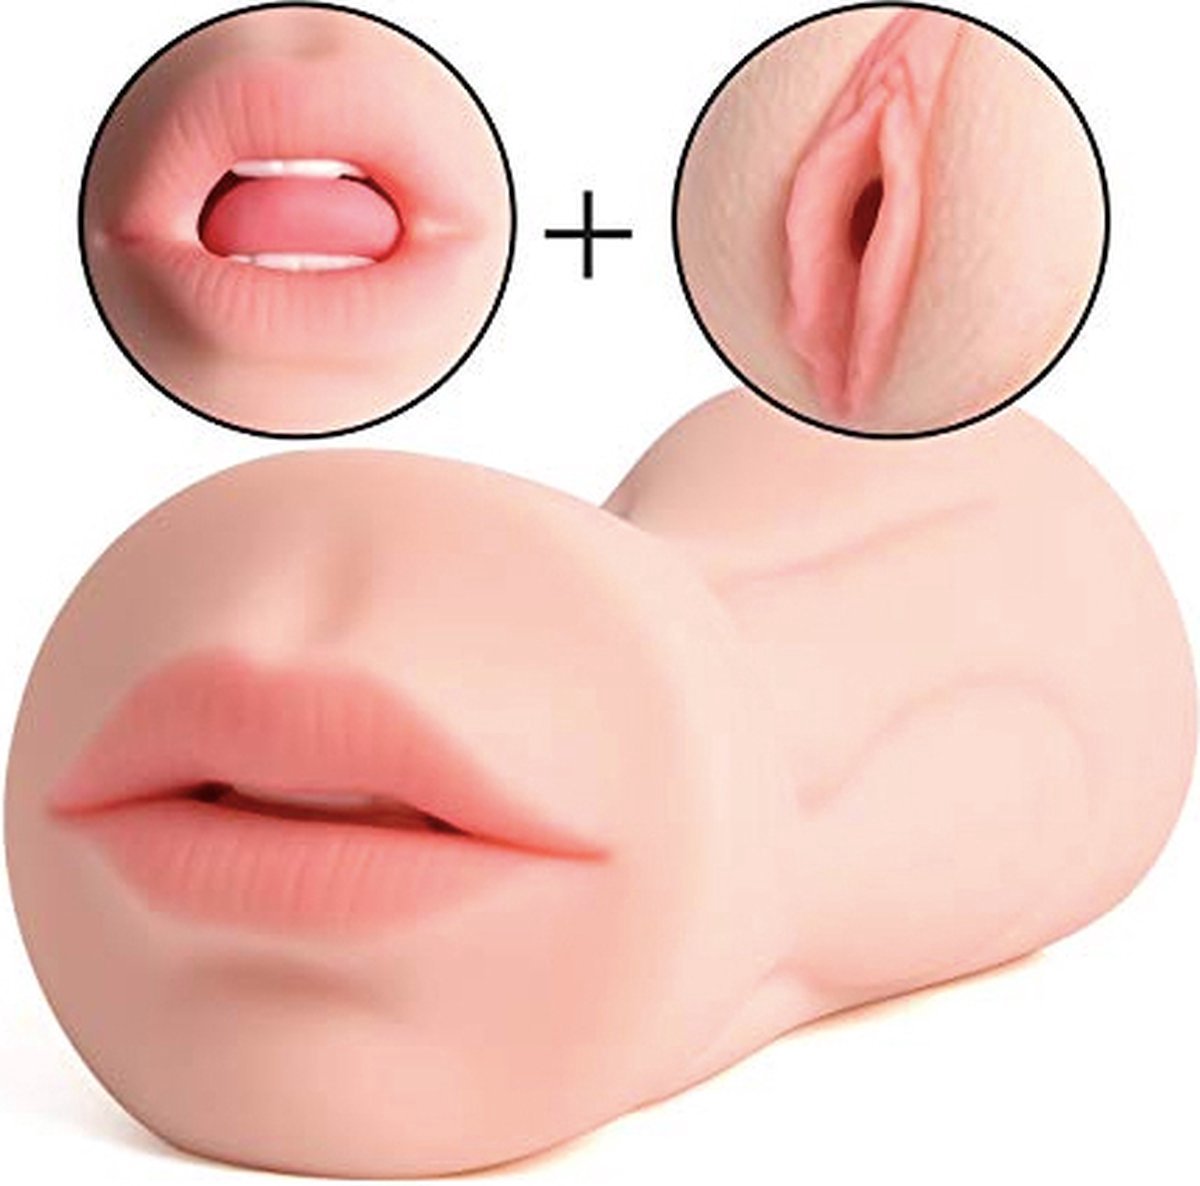 Masturbator - Uzzy M.F - Realistische Orale 3D- Pocket Pussy - 2 in 1 Mond & Vagina - Sex toys voor Mannen - 19cm -Voor Hem -Kunstmatige Vagina & Mond Siliconen - Feestdagen - Cadeau